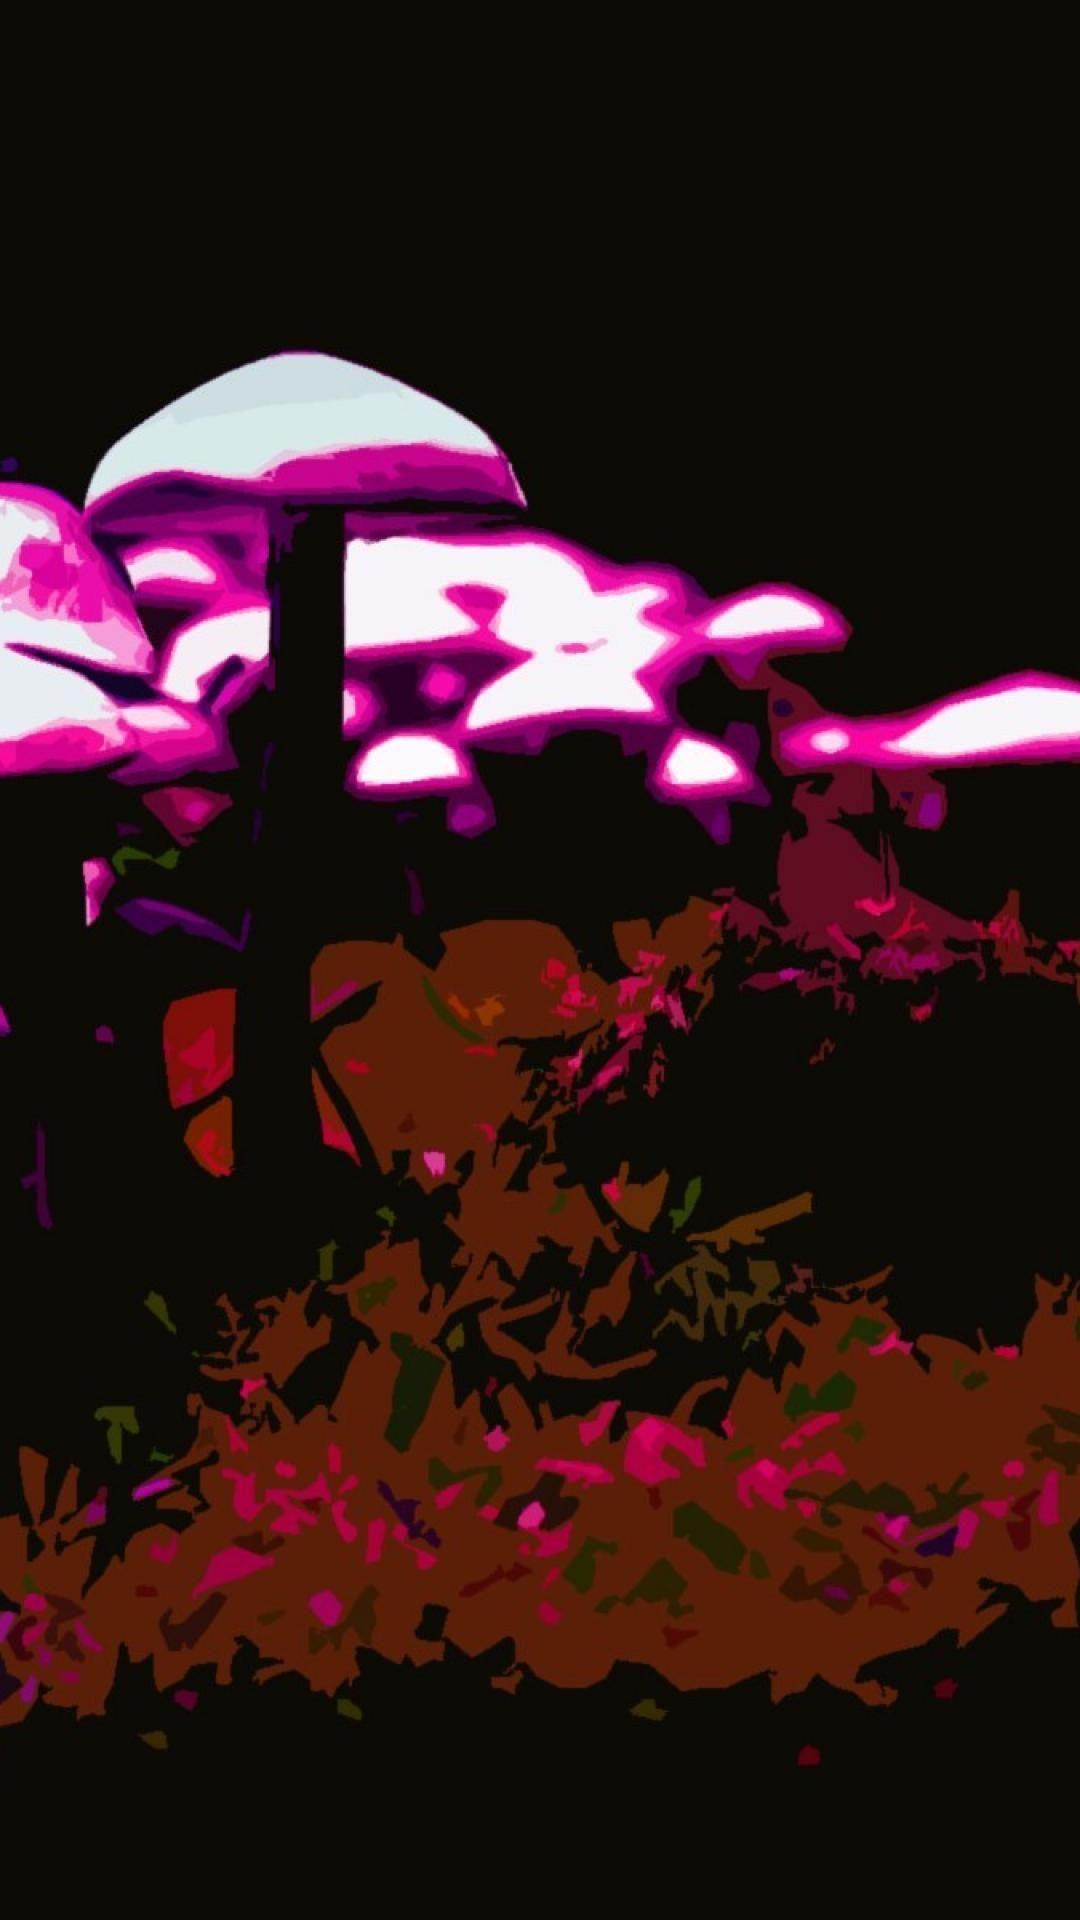 Psychedelic Mushrooms Wallpapers - Wallpaper Cave - 1080 x 1920 jpeg 92kB